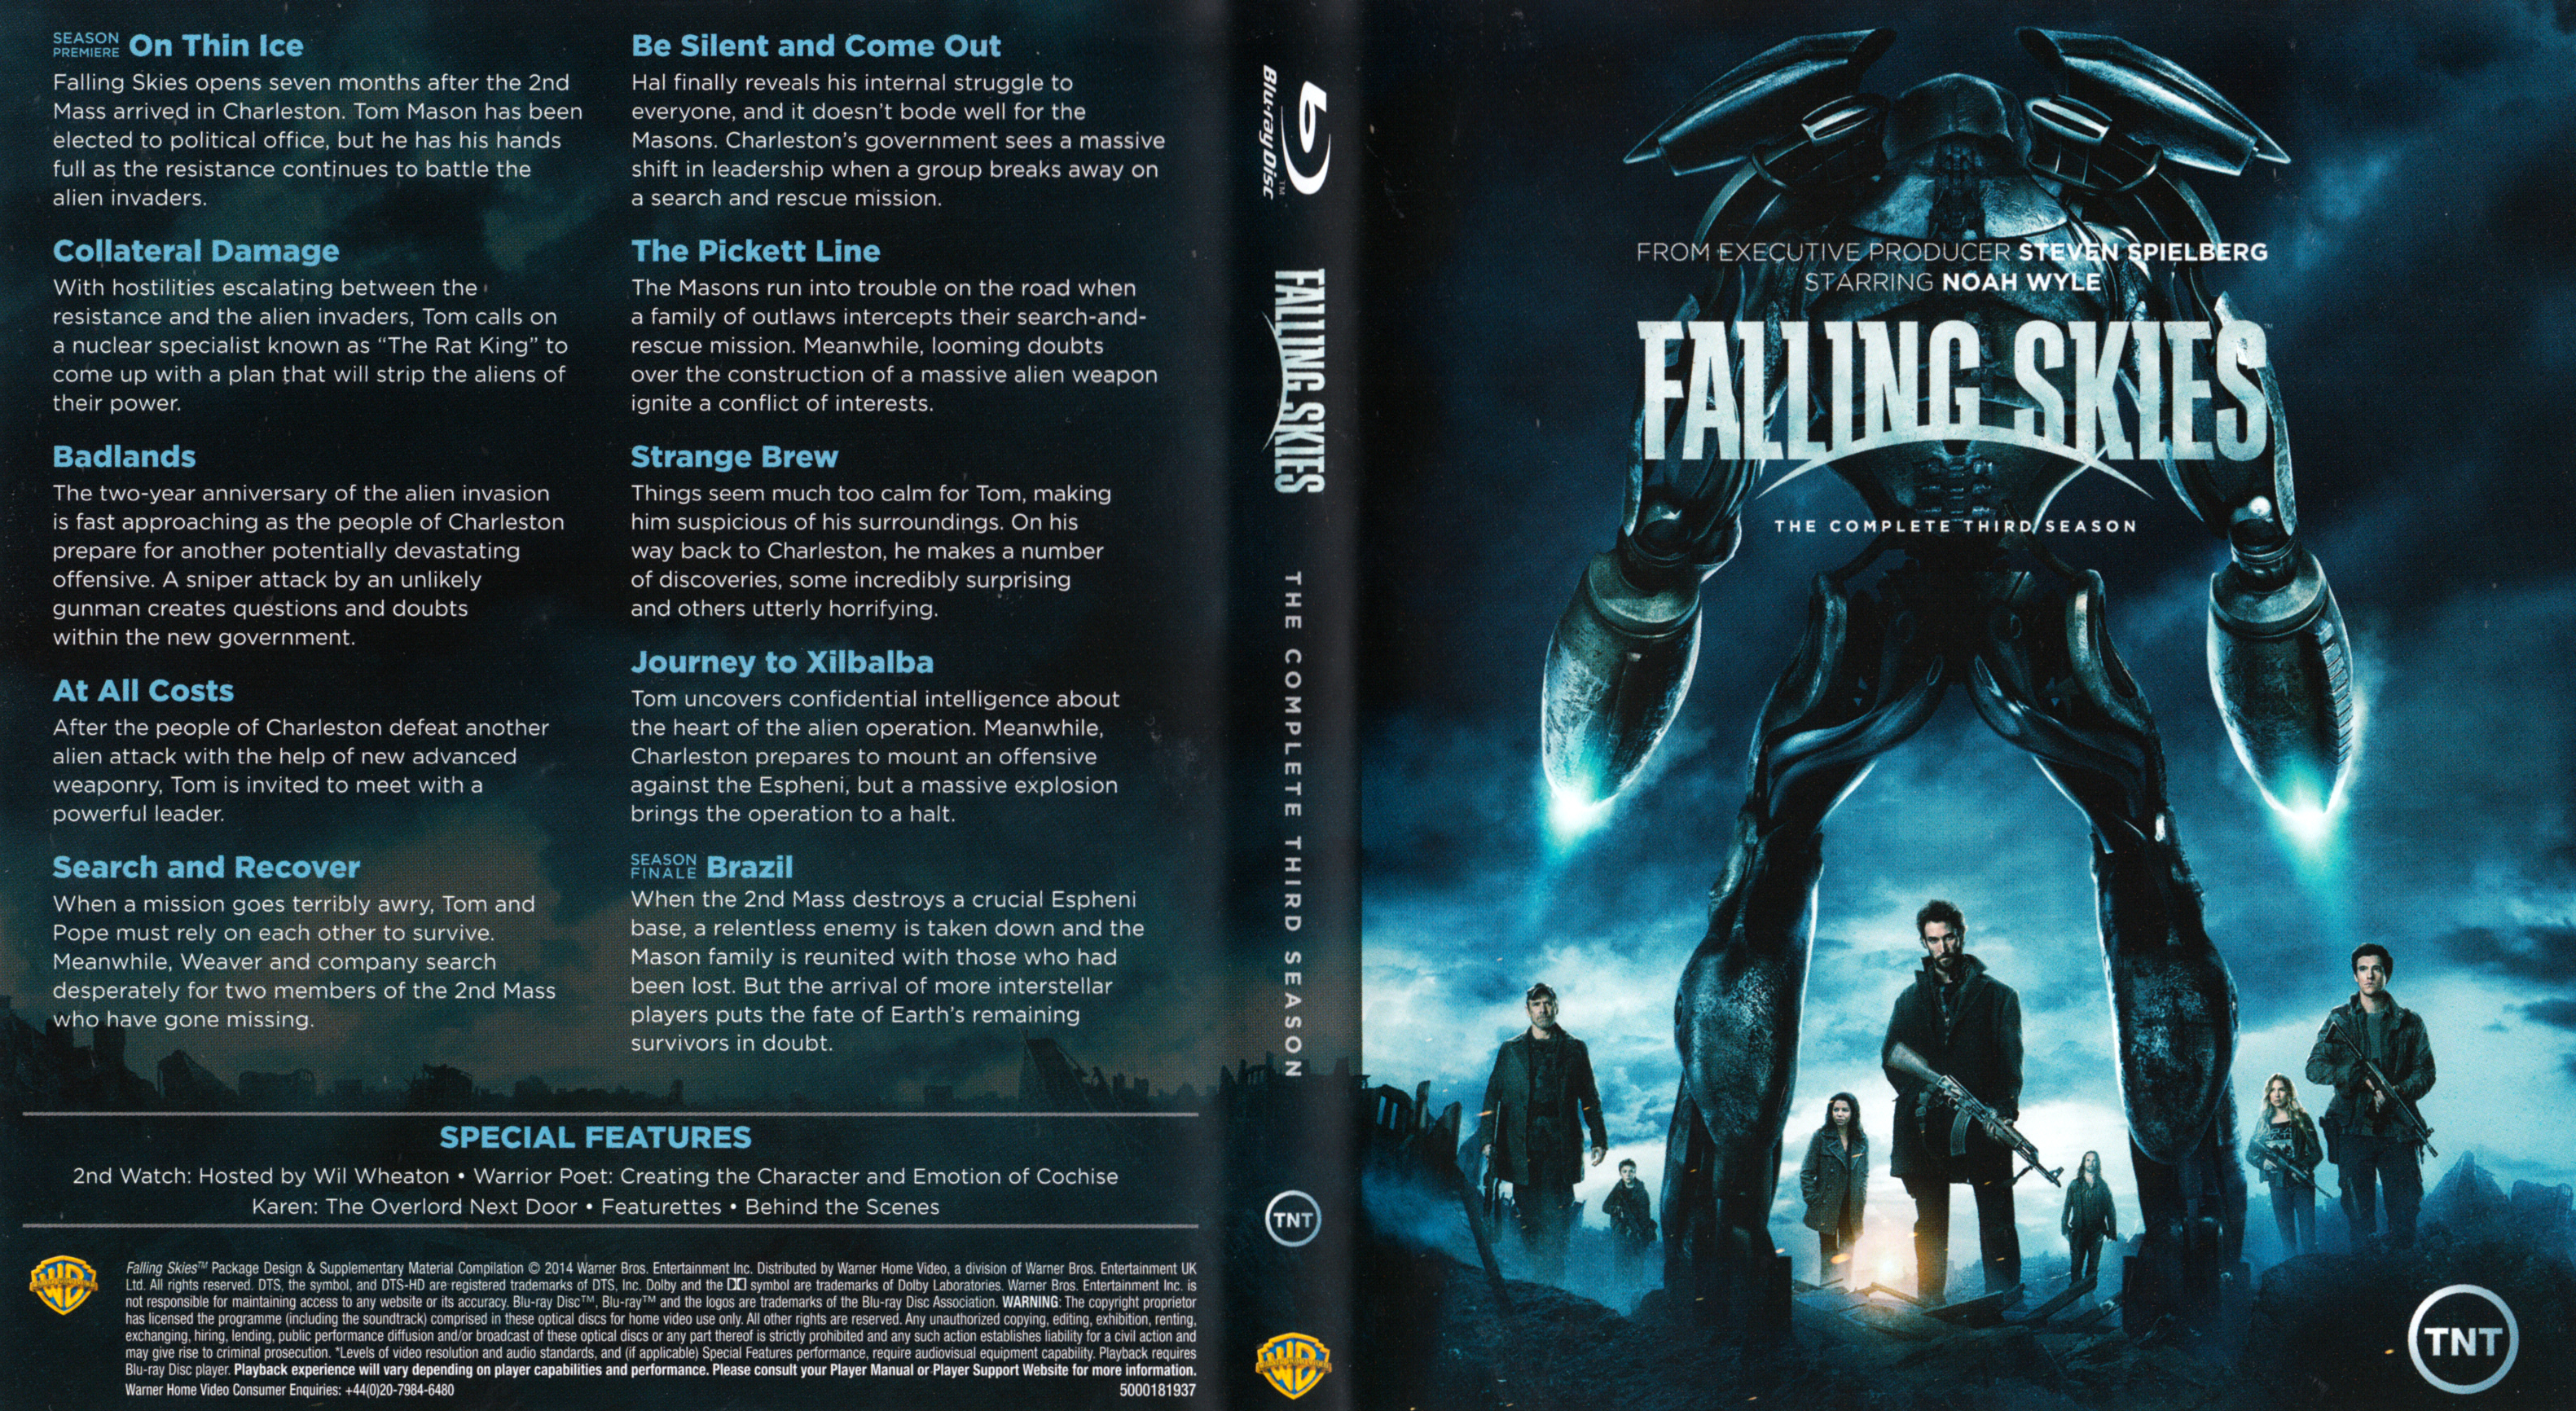 Jaquette DVD Falling Skies Saison 3 Zone 1 (BLU-RAY) v2